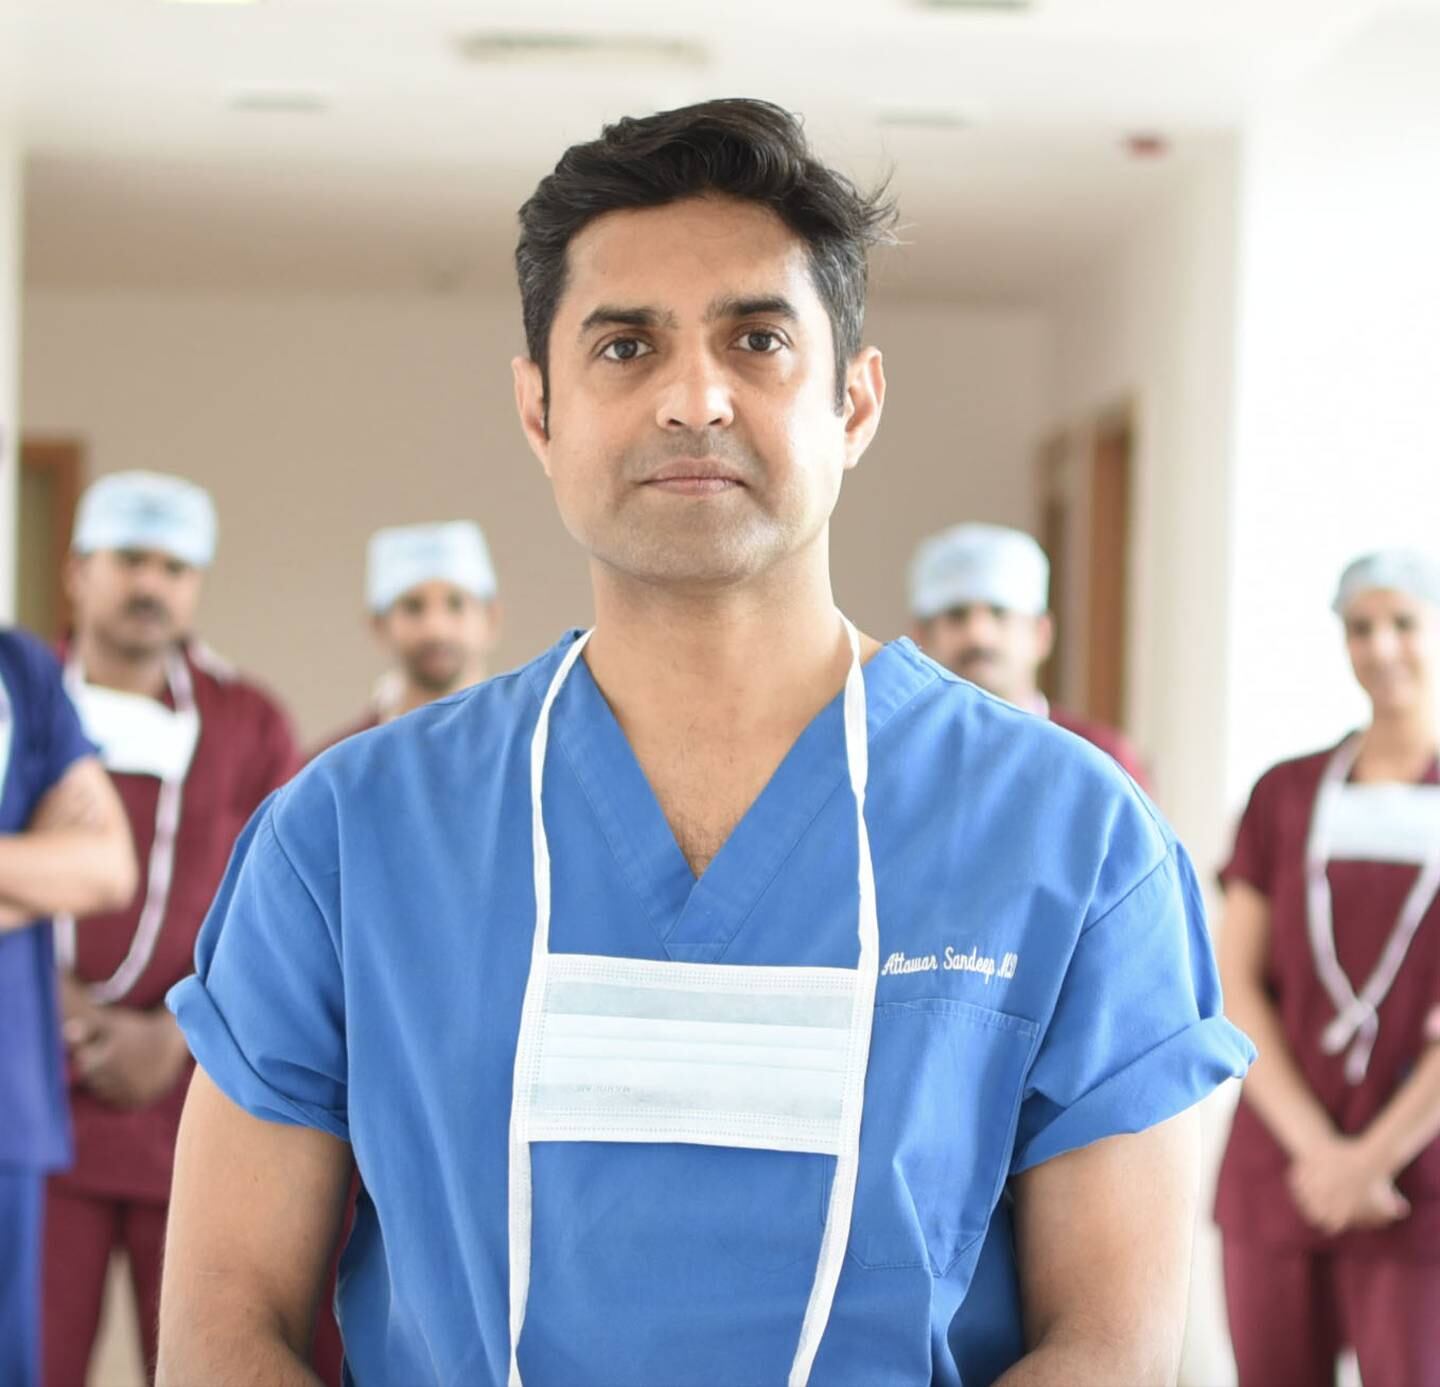 Dr Sandeep Attawar, one of India's leading organ transplant surgeons. 
MediGlobus